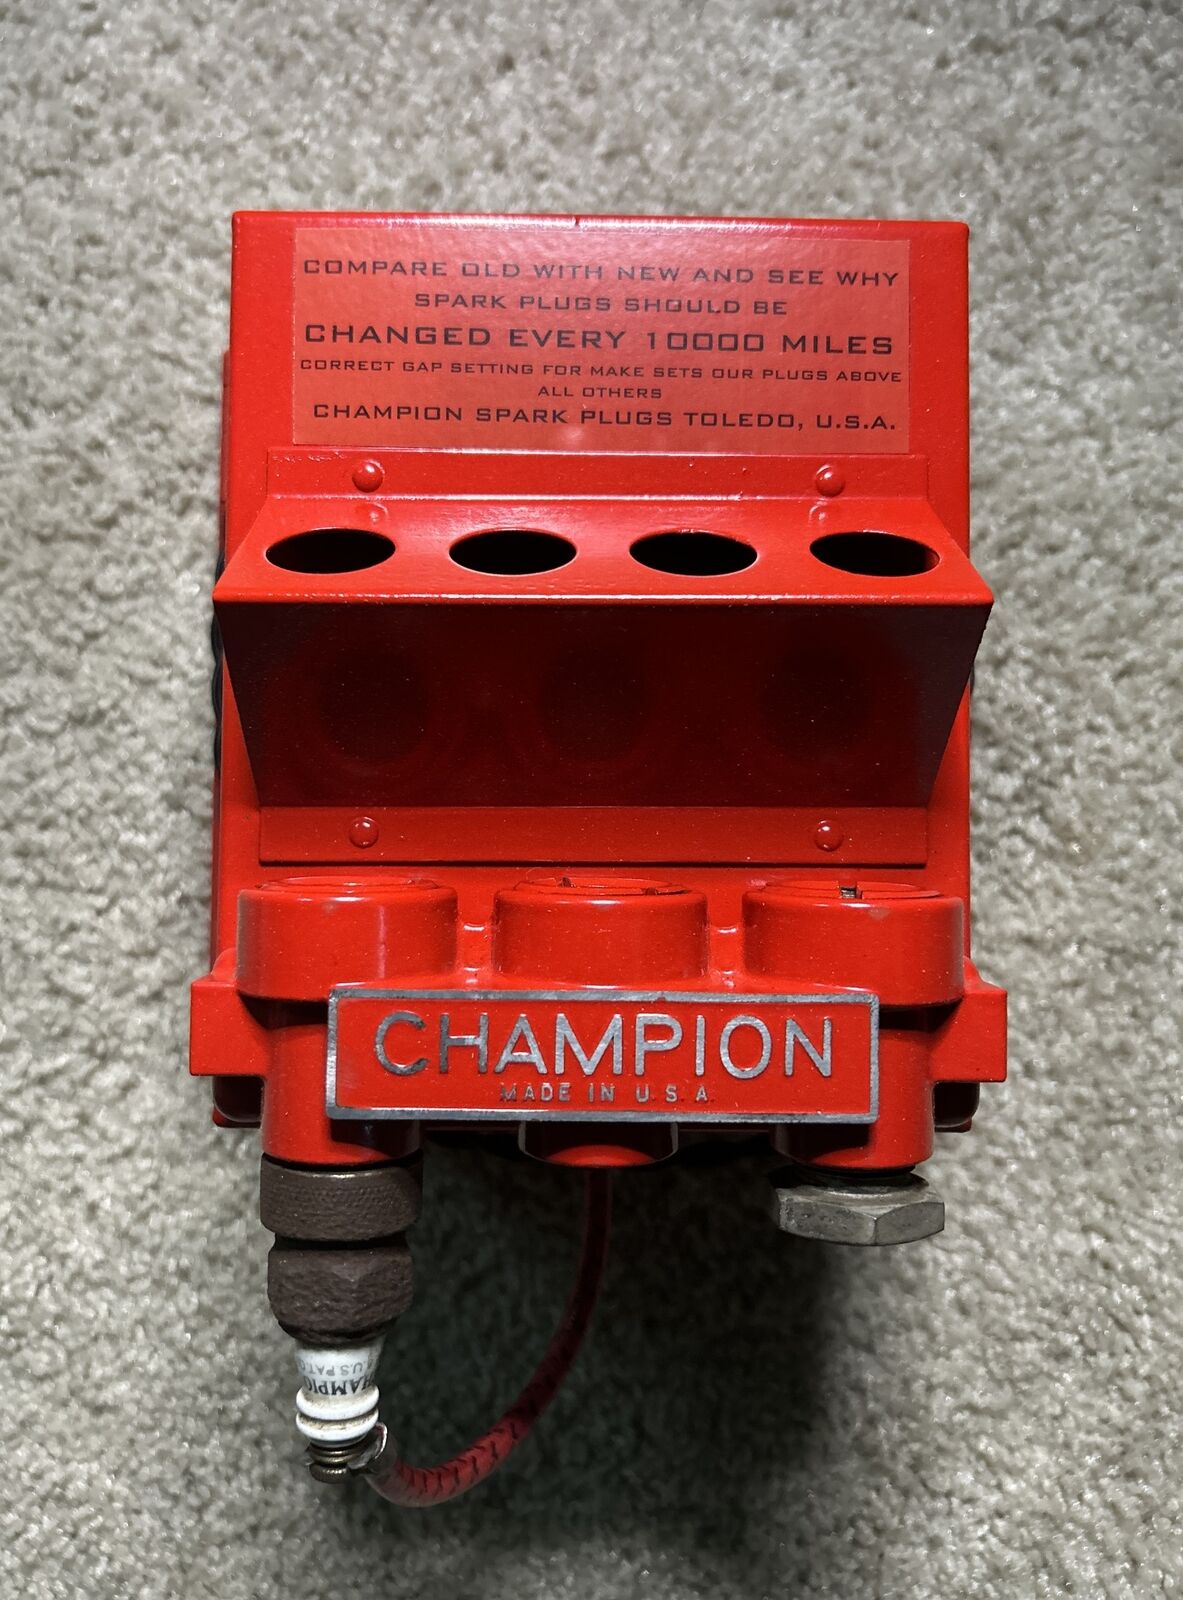 Antique 1930’s Champion Spark Plug Tester - Restored